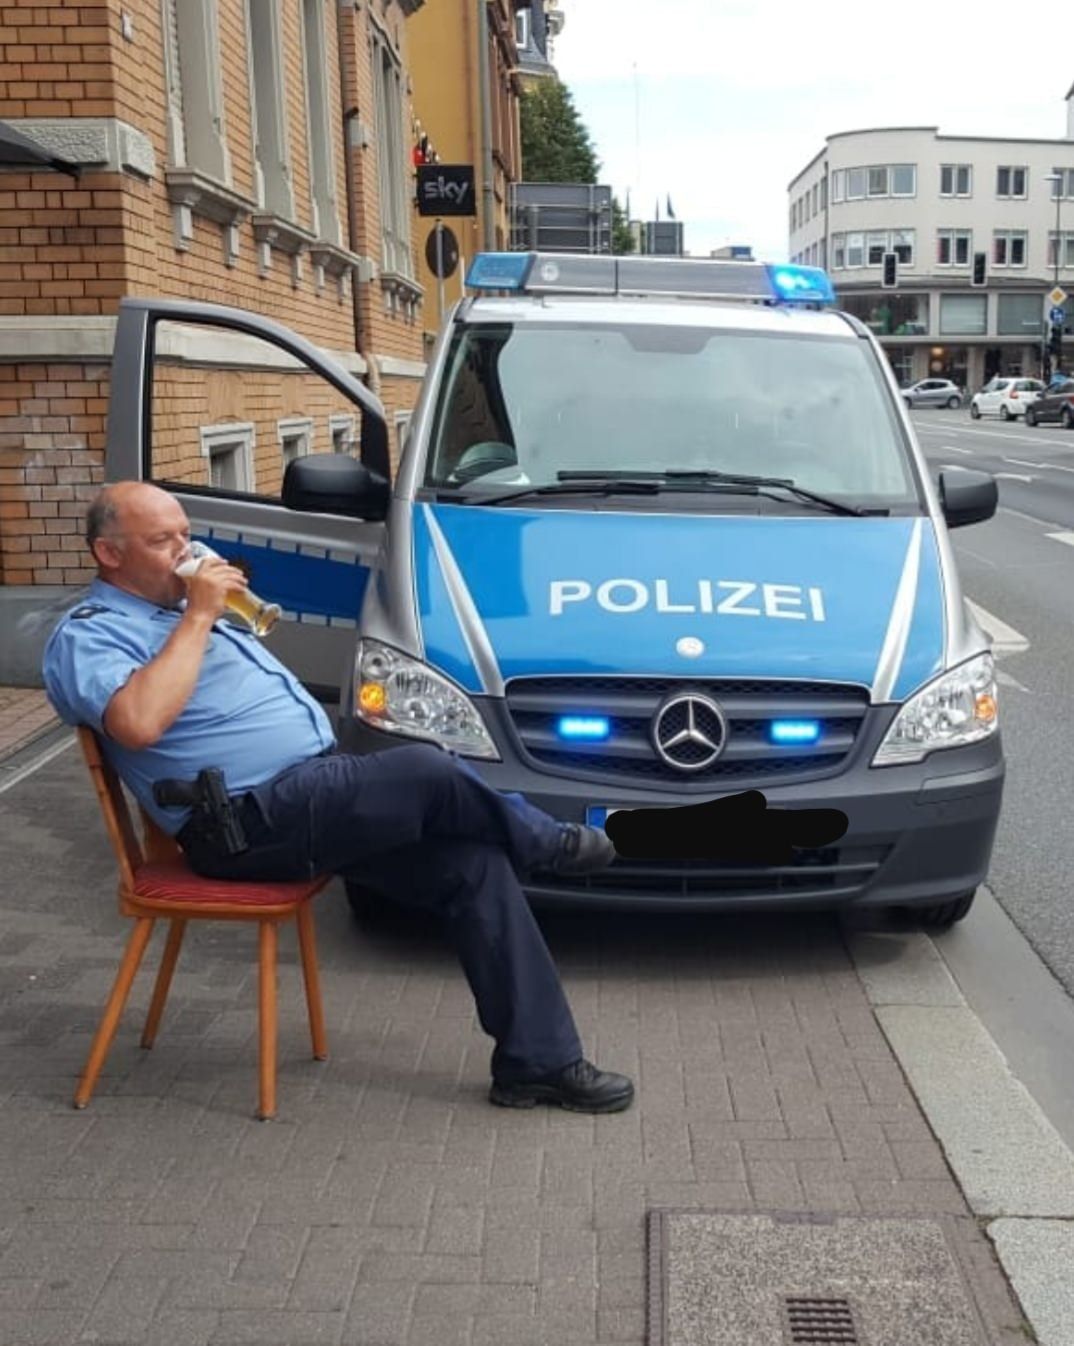 A German policeman in his natural environment